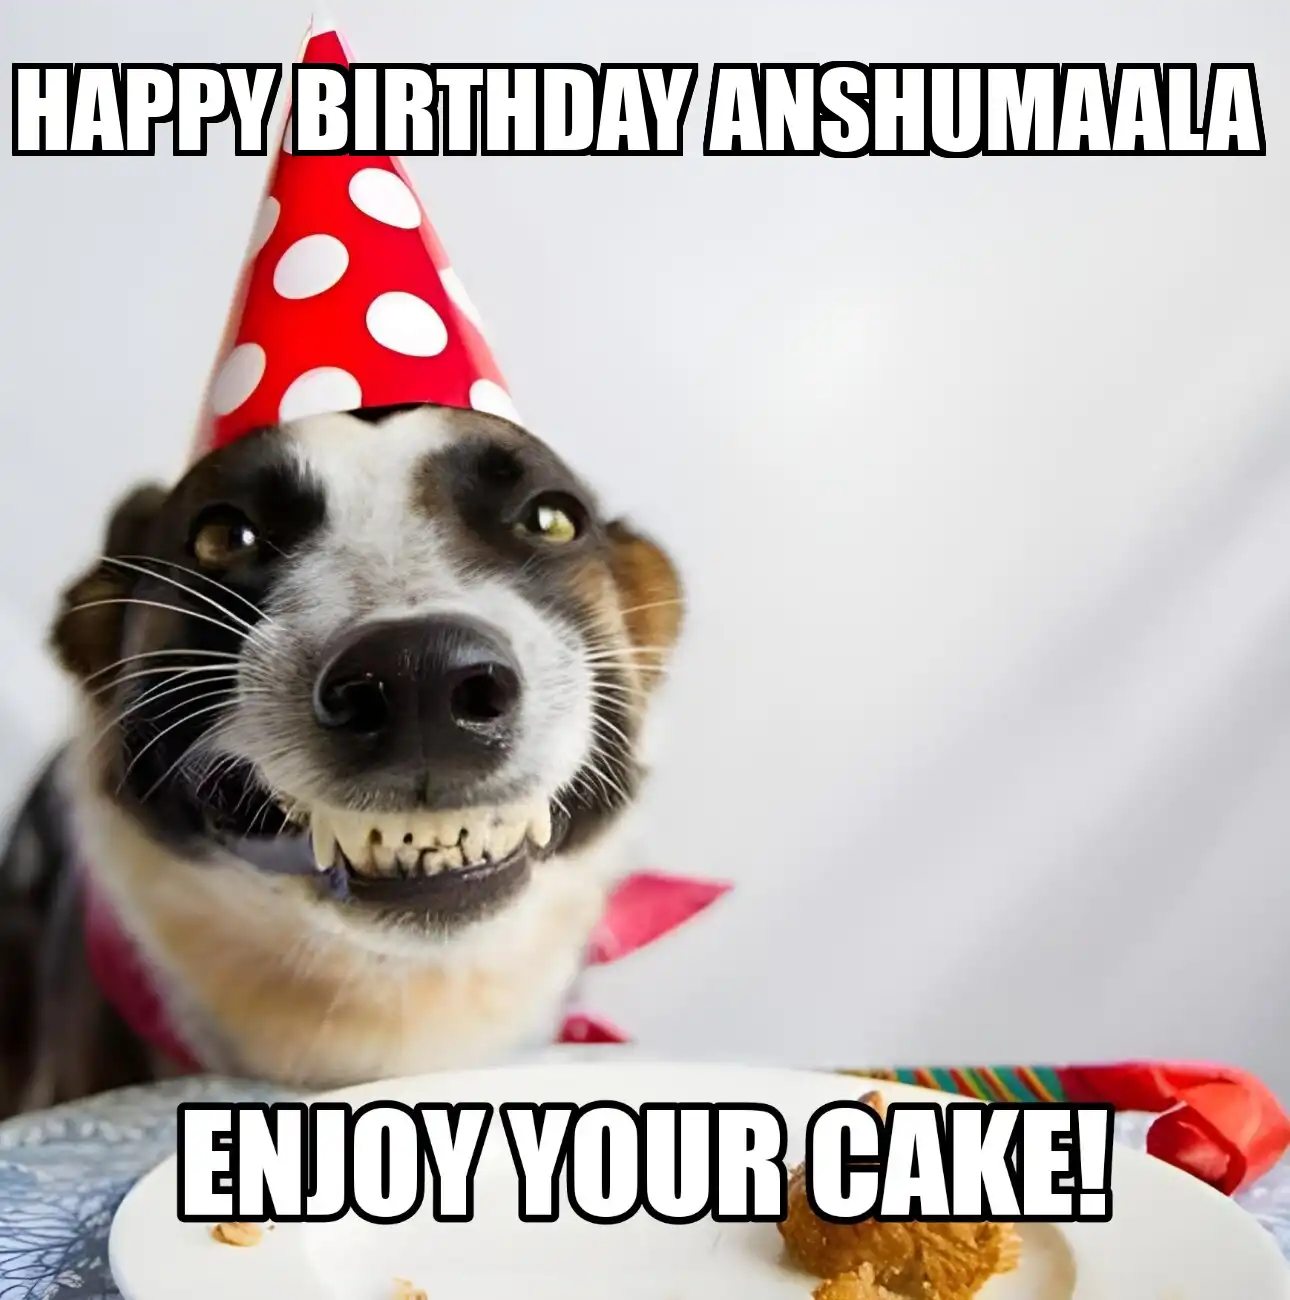 Happy Birthday Anshumaala Enjoy Your Cake Dog Meme